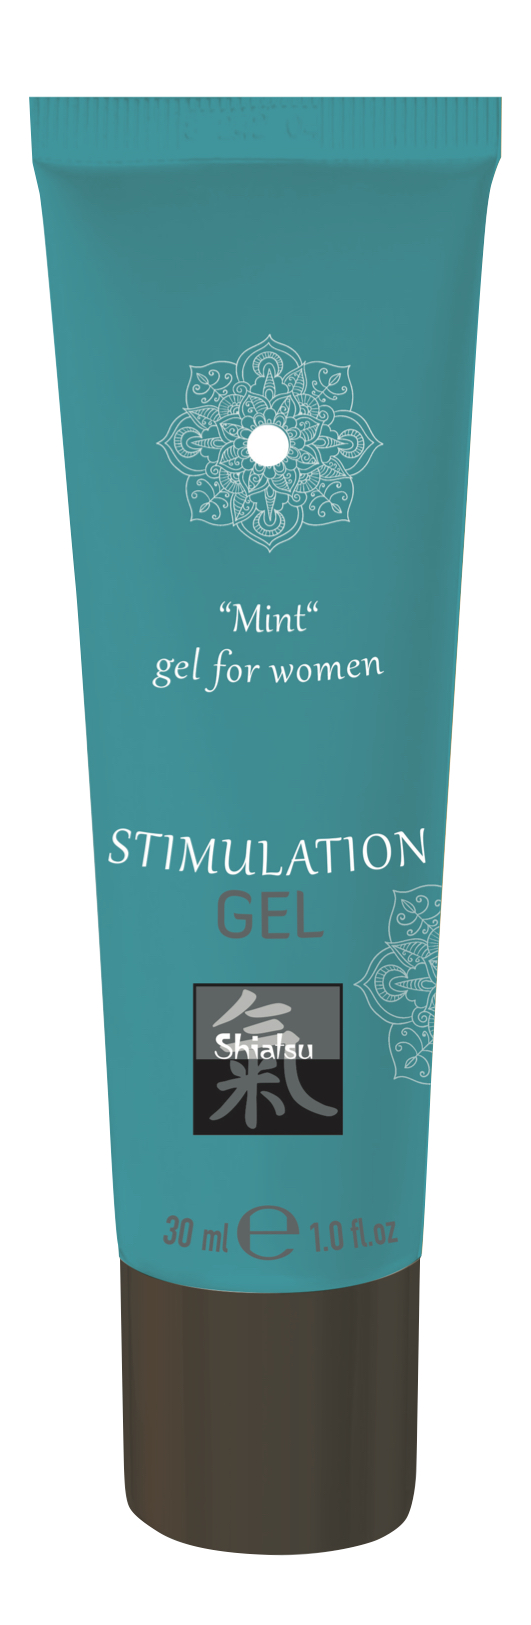 Shiatsu Clitoral Stimulation Gel Mint 30ml - Body Care